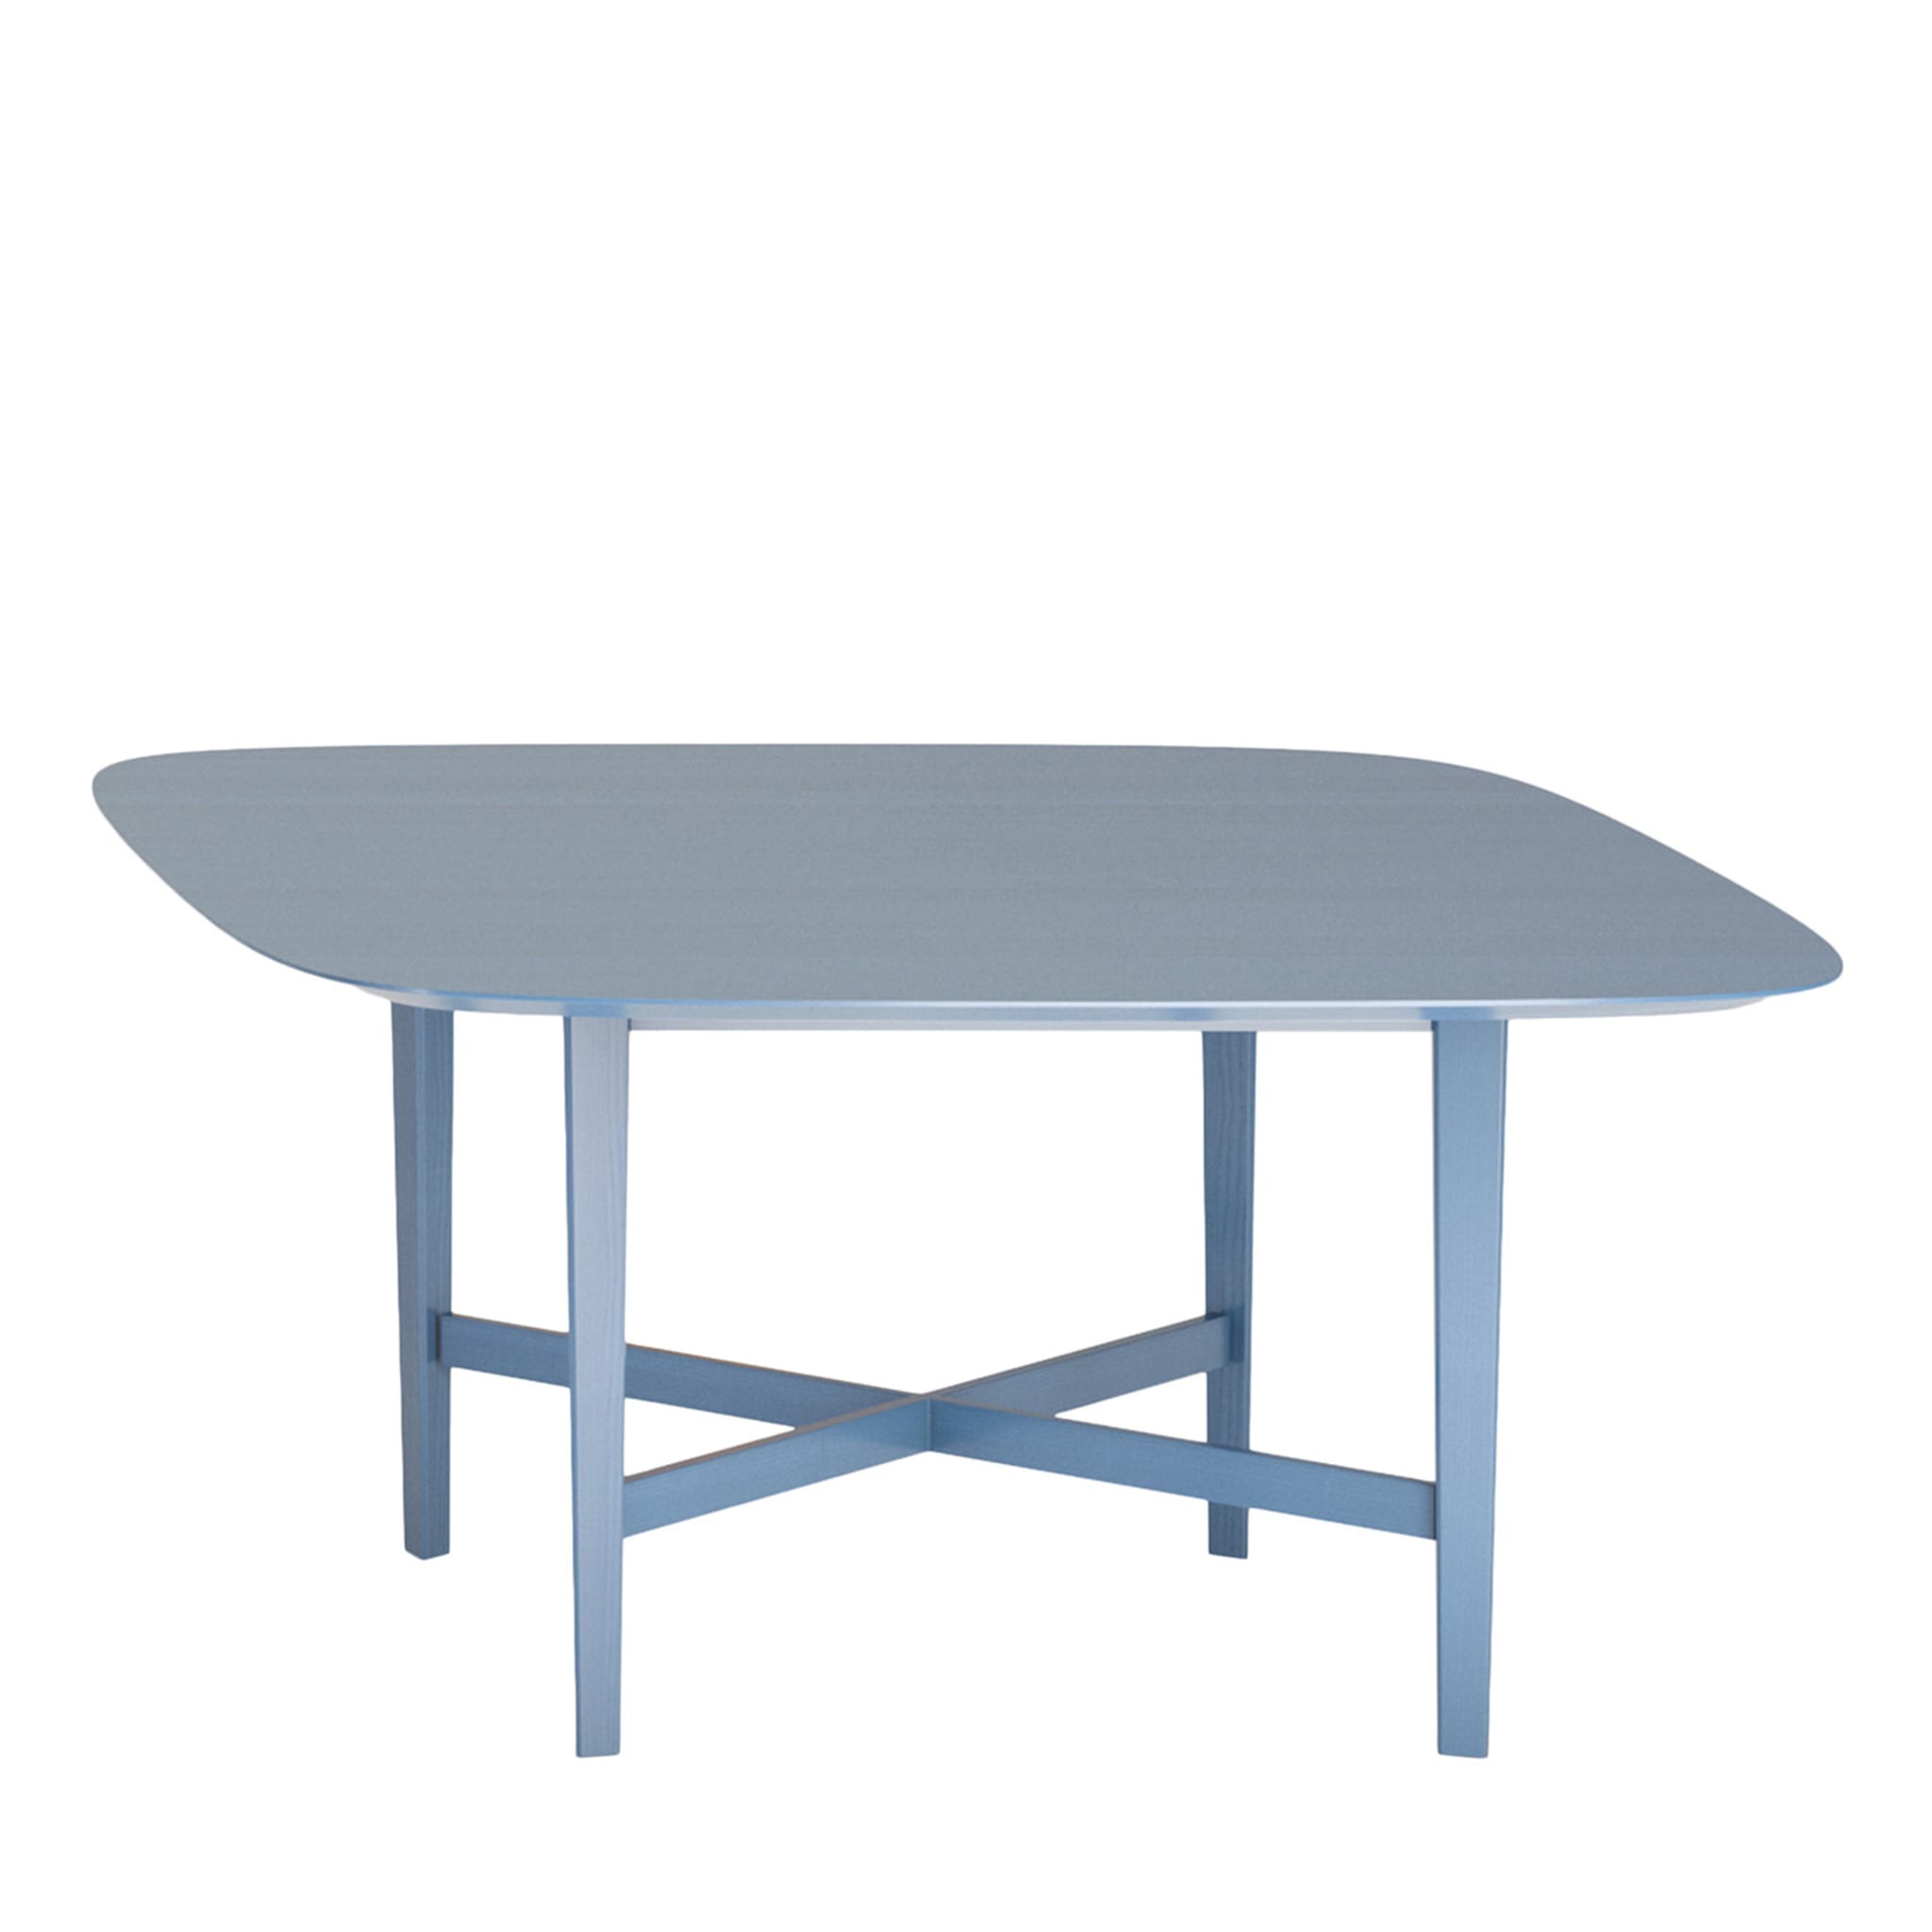 Luigi Filippo Squared Azure Table by M. Laudani & M. Romanelli - Main view